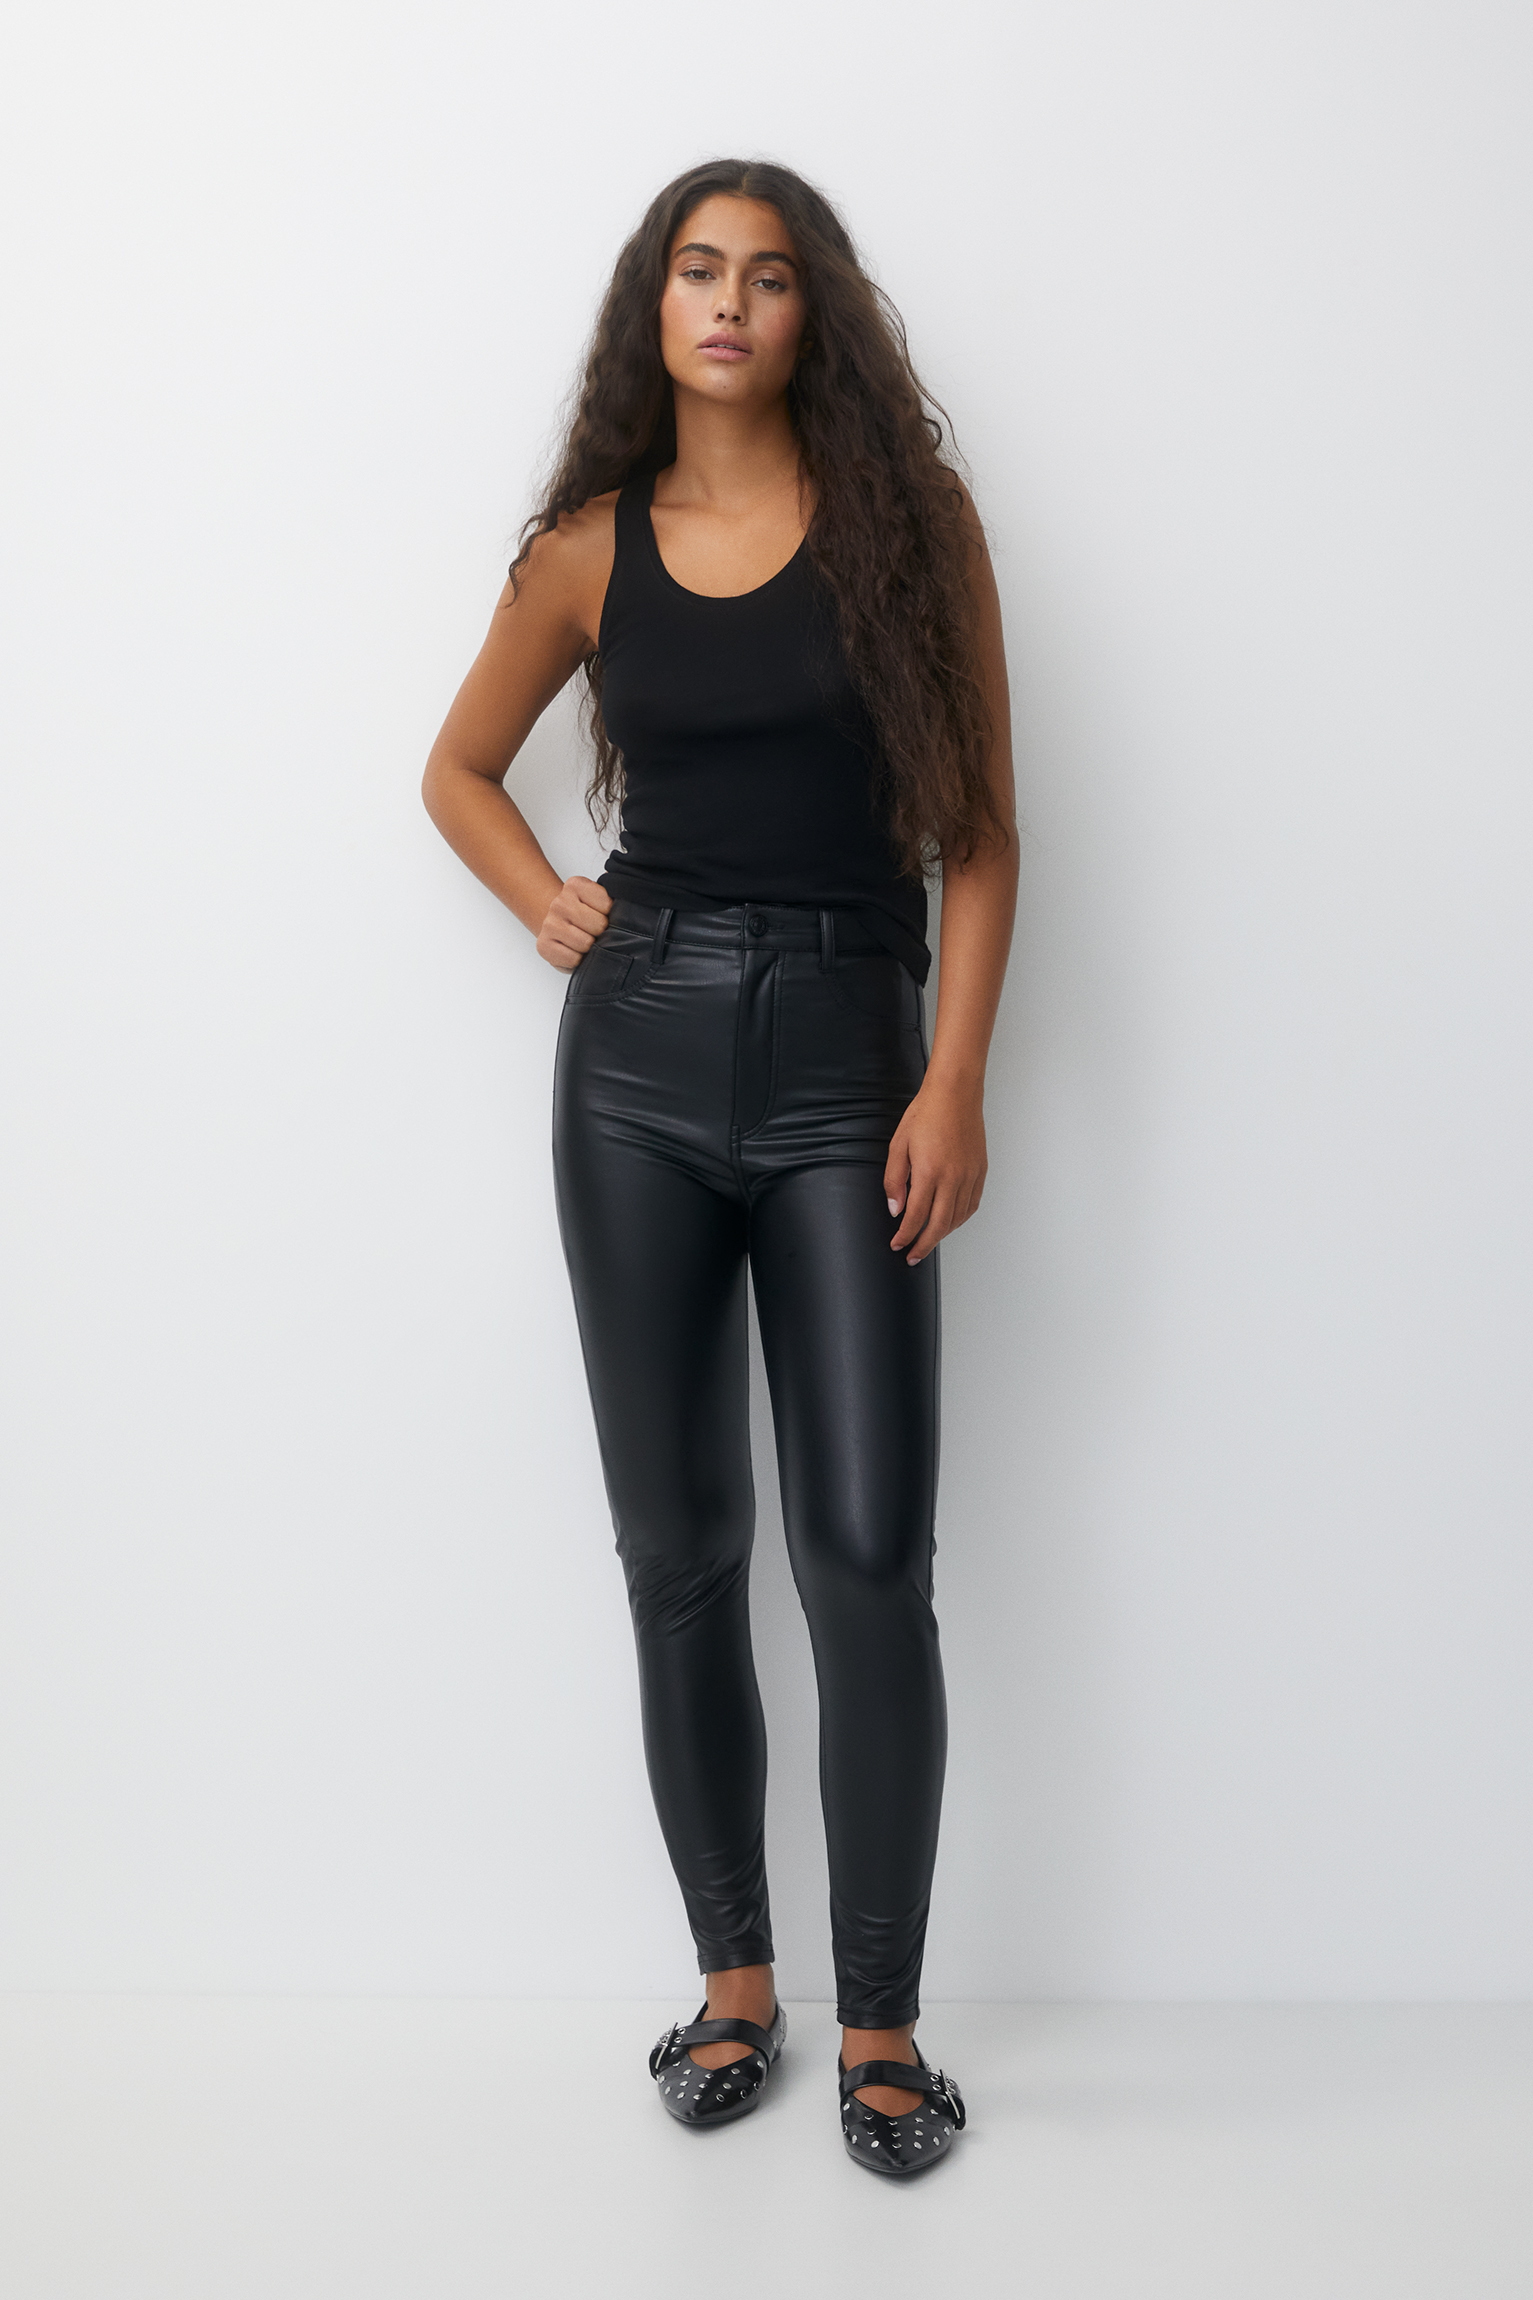 Buy hongqiantai Women Sexy Faux Leather Leggings Skinny Leather Pants Black  M at Amazon.in